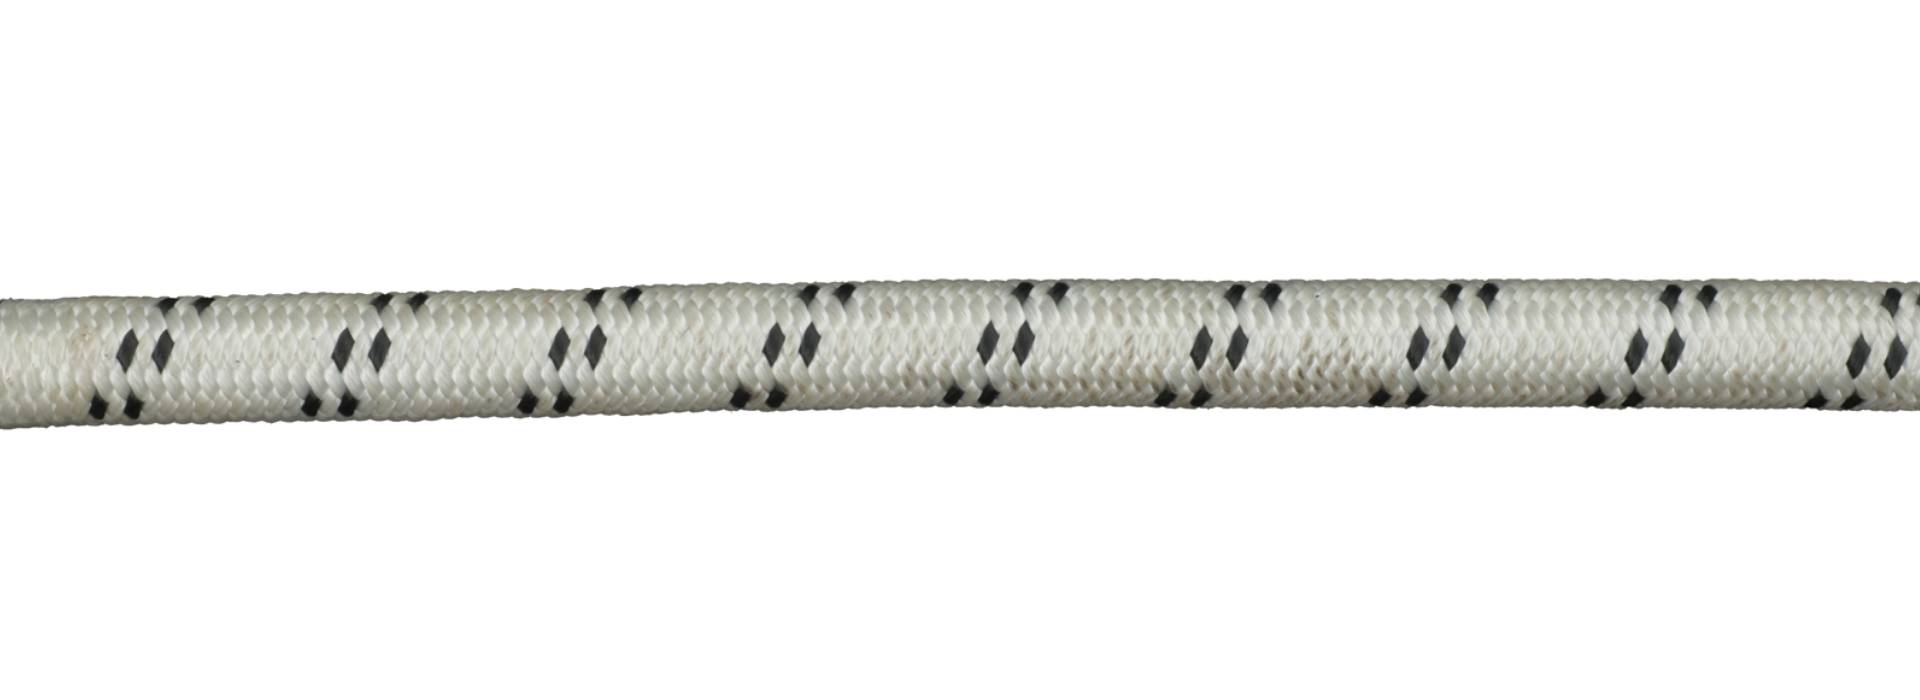 Plateena Neo Ropes of Garware Technical Fibres